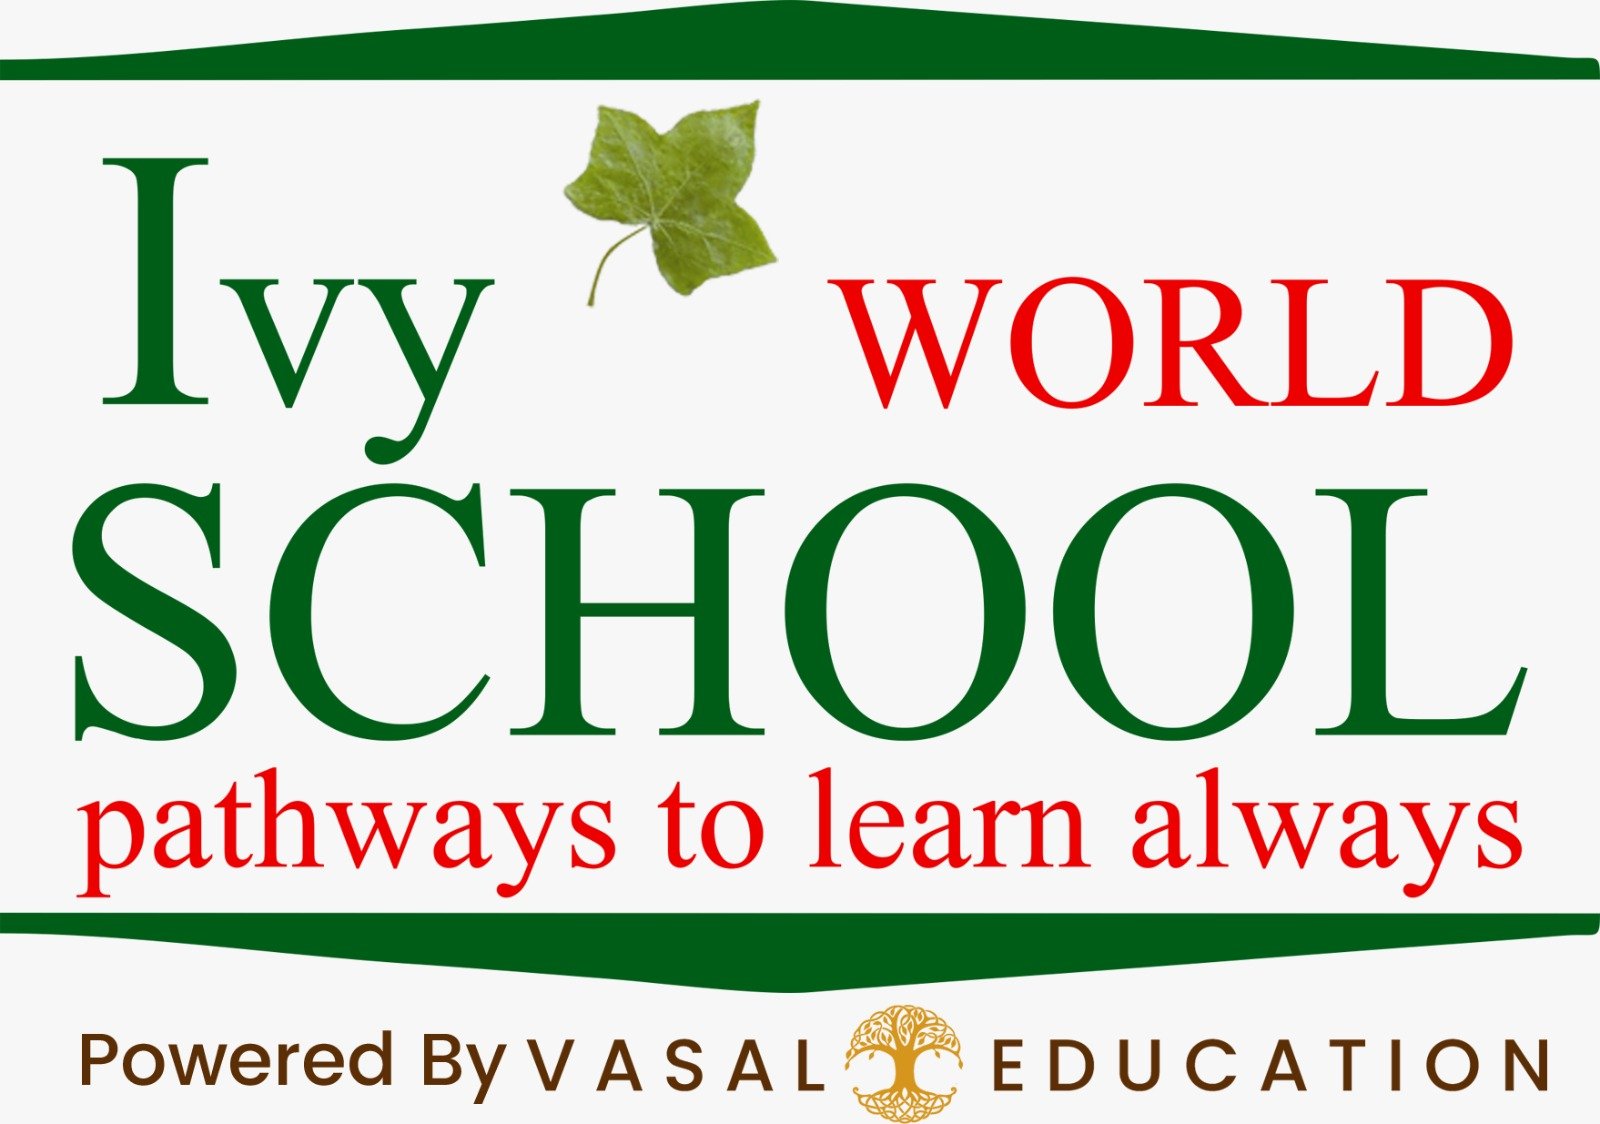 Ivy World School